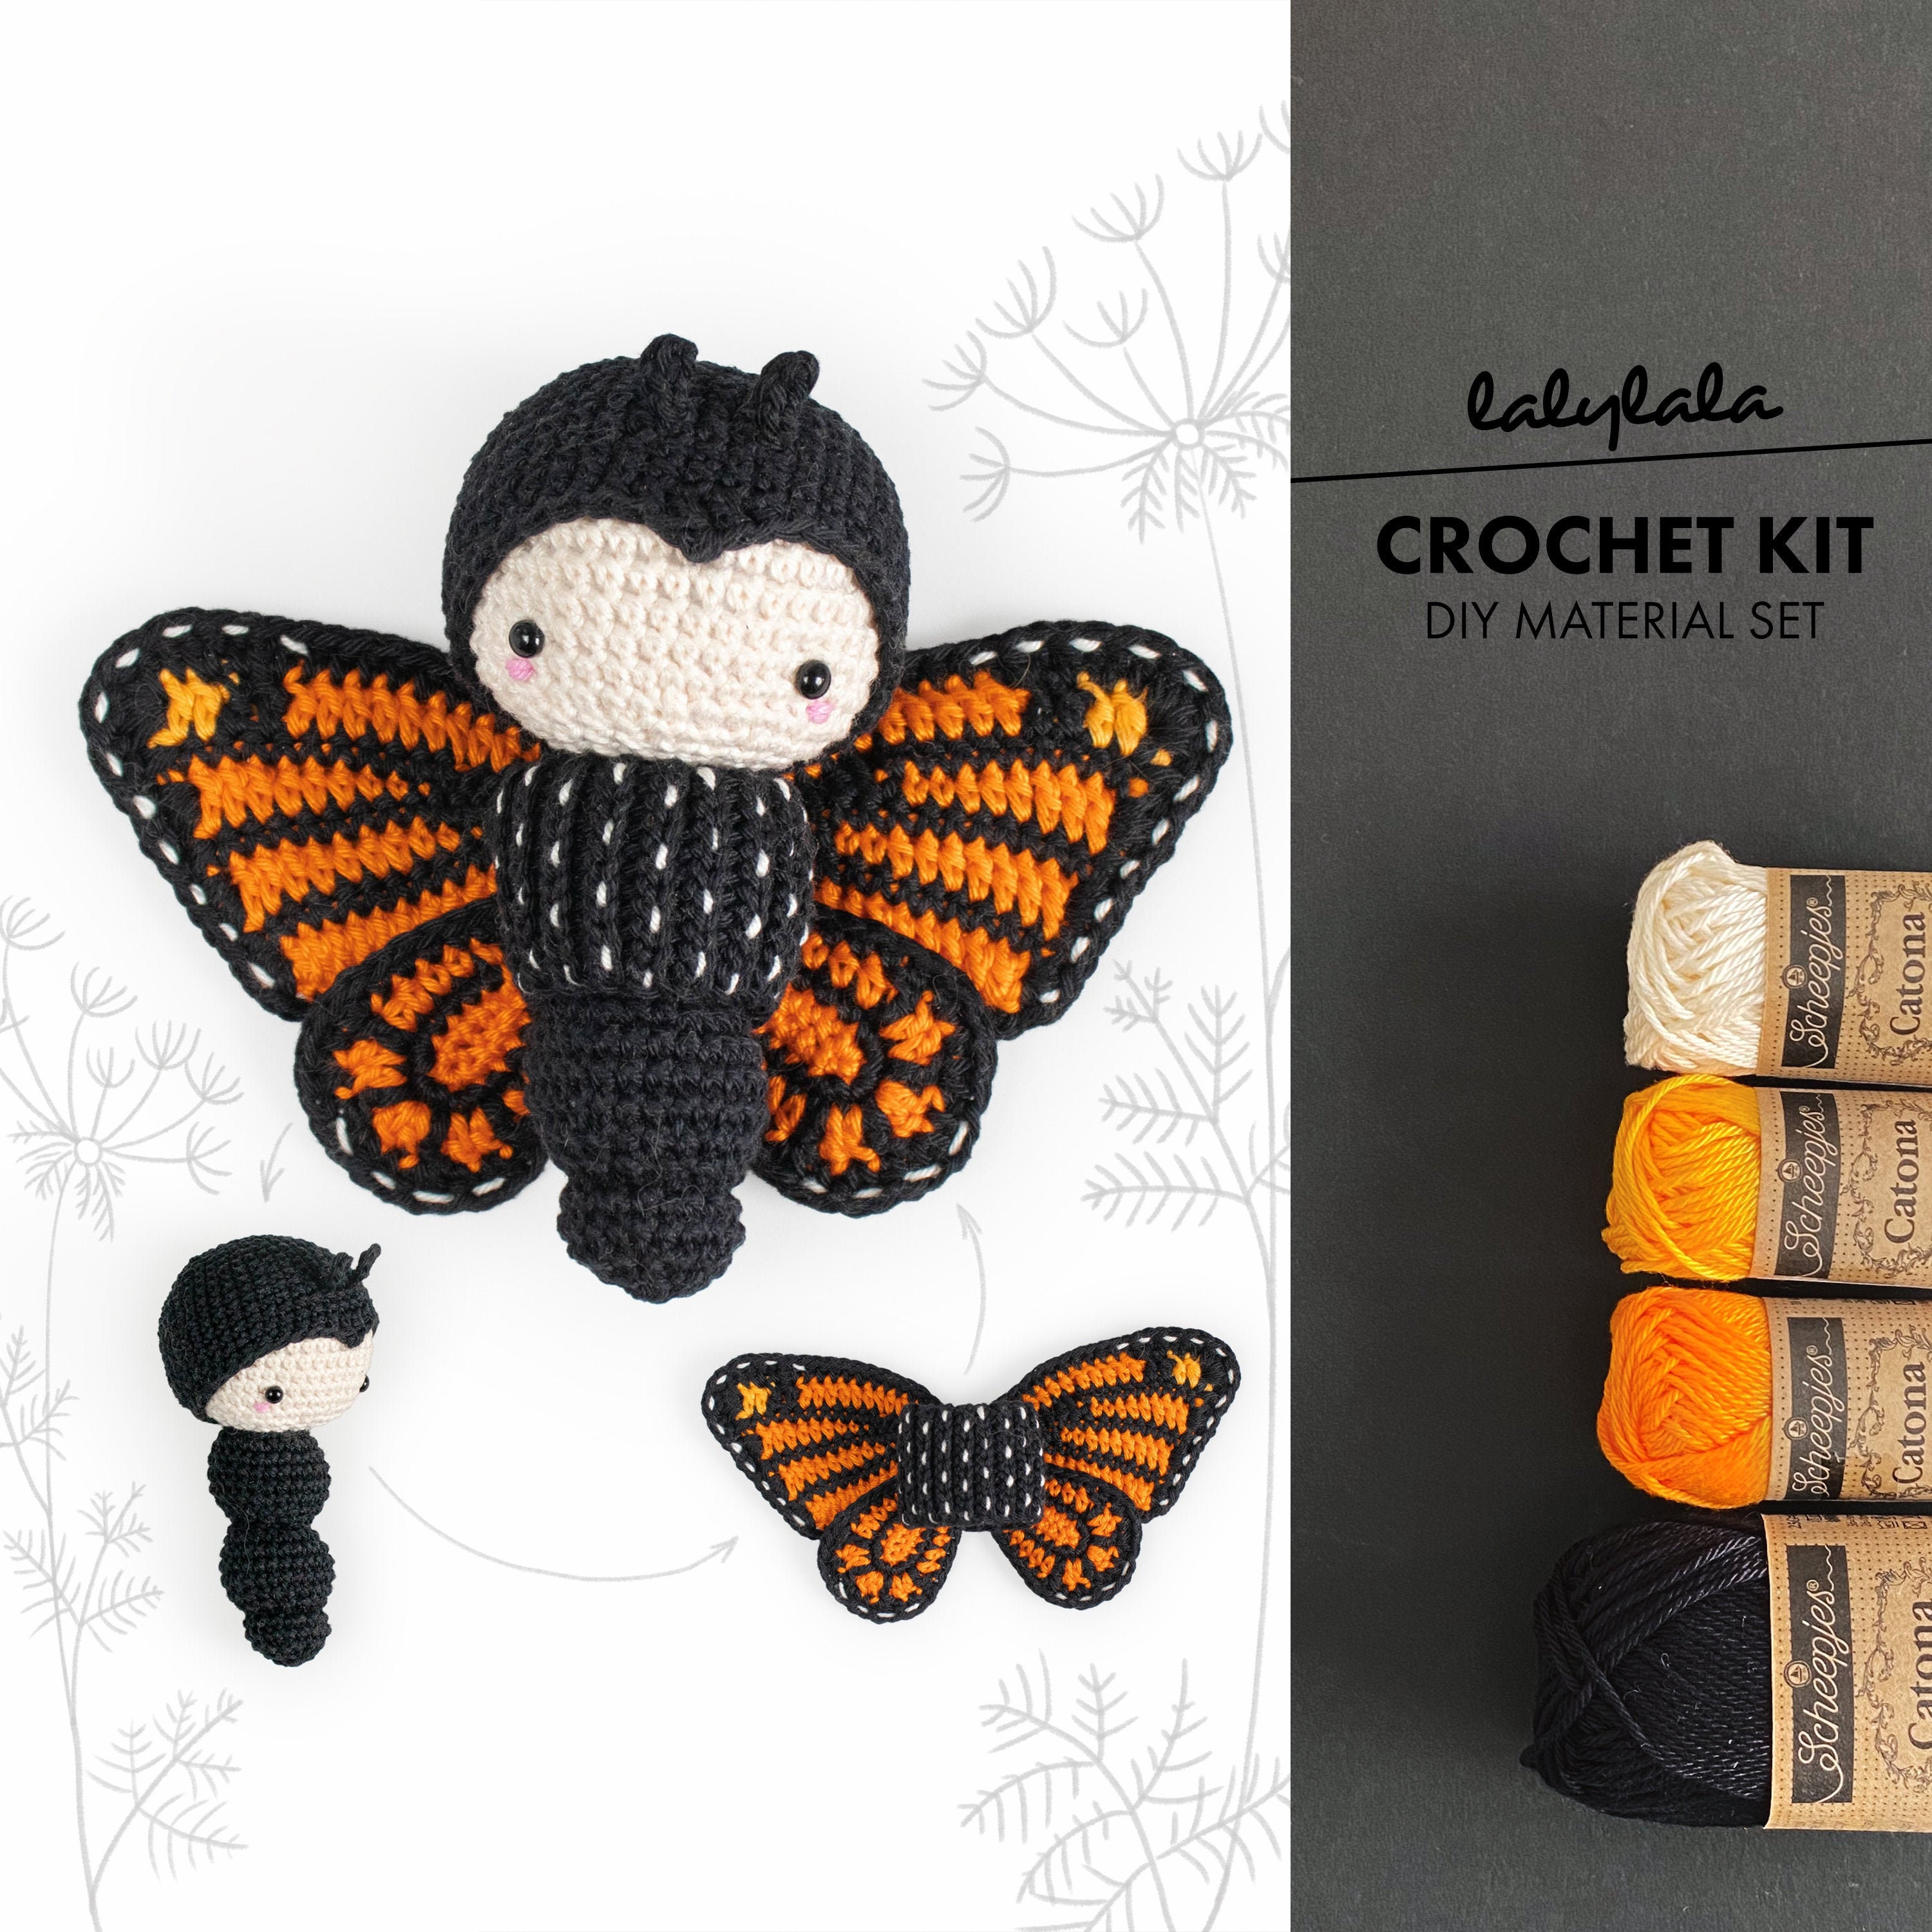 DIY Crochet Kit, Crochet Bag Kit, Crochet Kit Beginner With Yarn, Crochet  Kit for Adults, Crochet Pattern VIDEO 